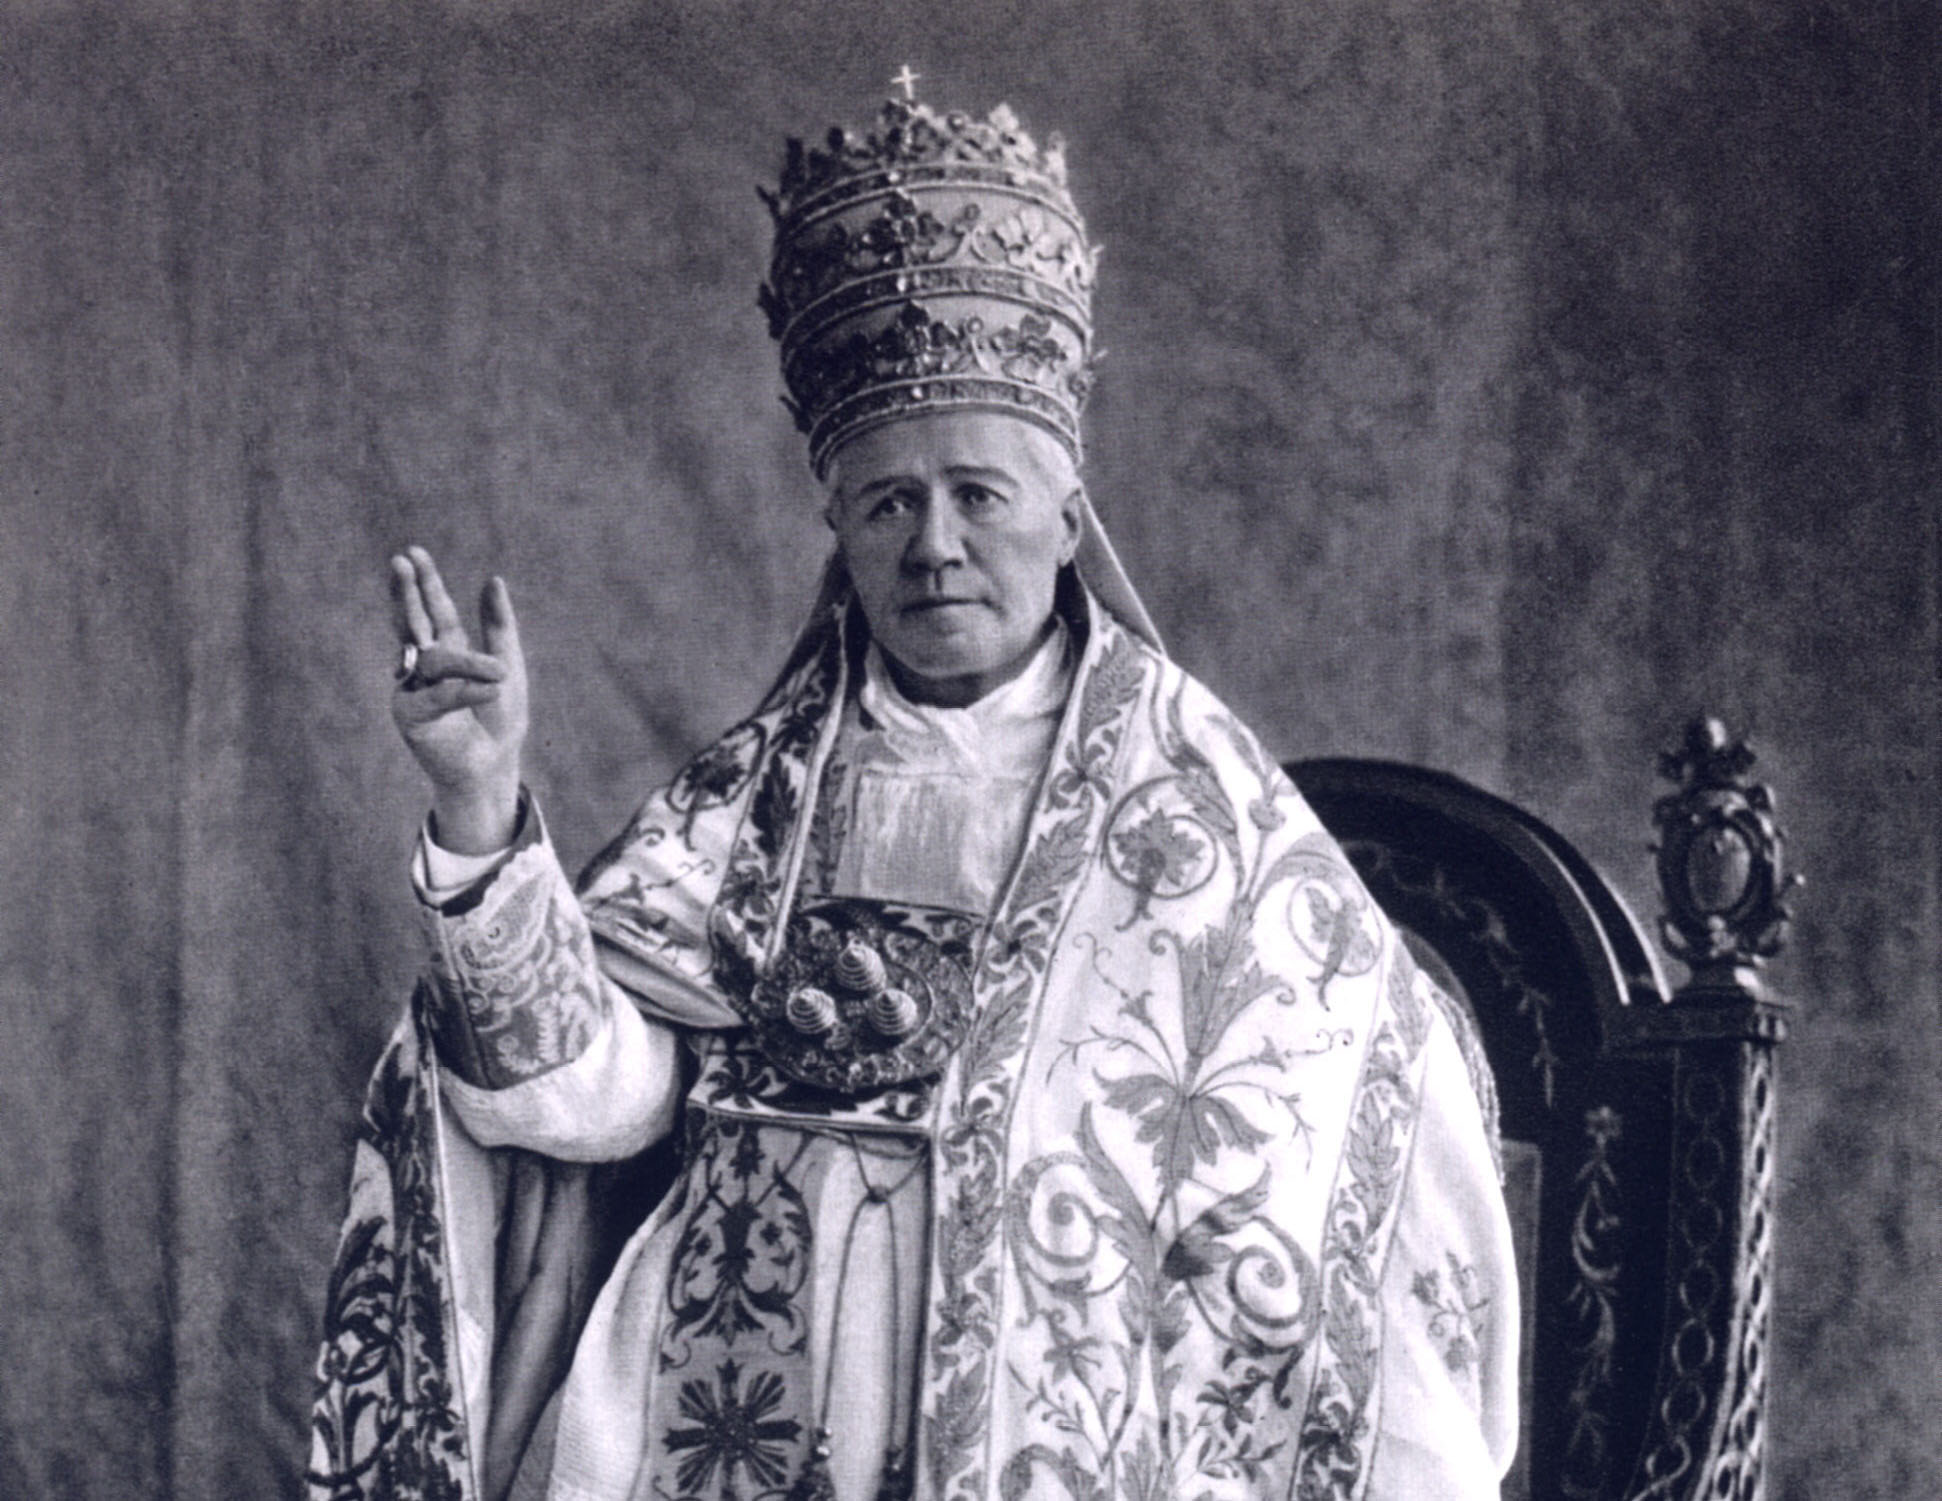 Św. Pius X, Papież, pogromca modernizmu.